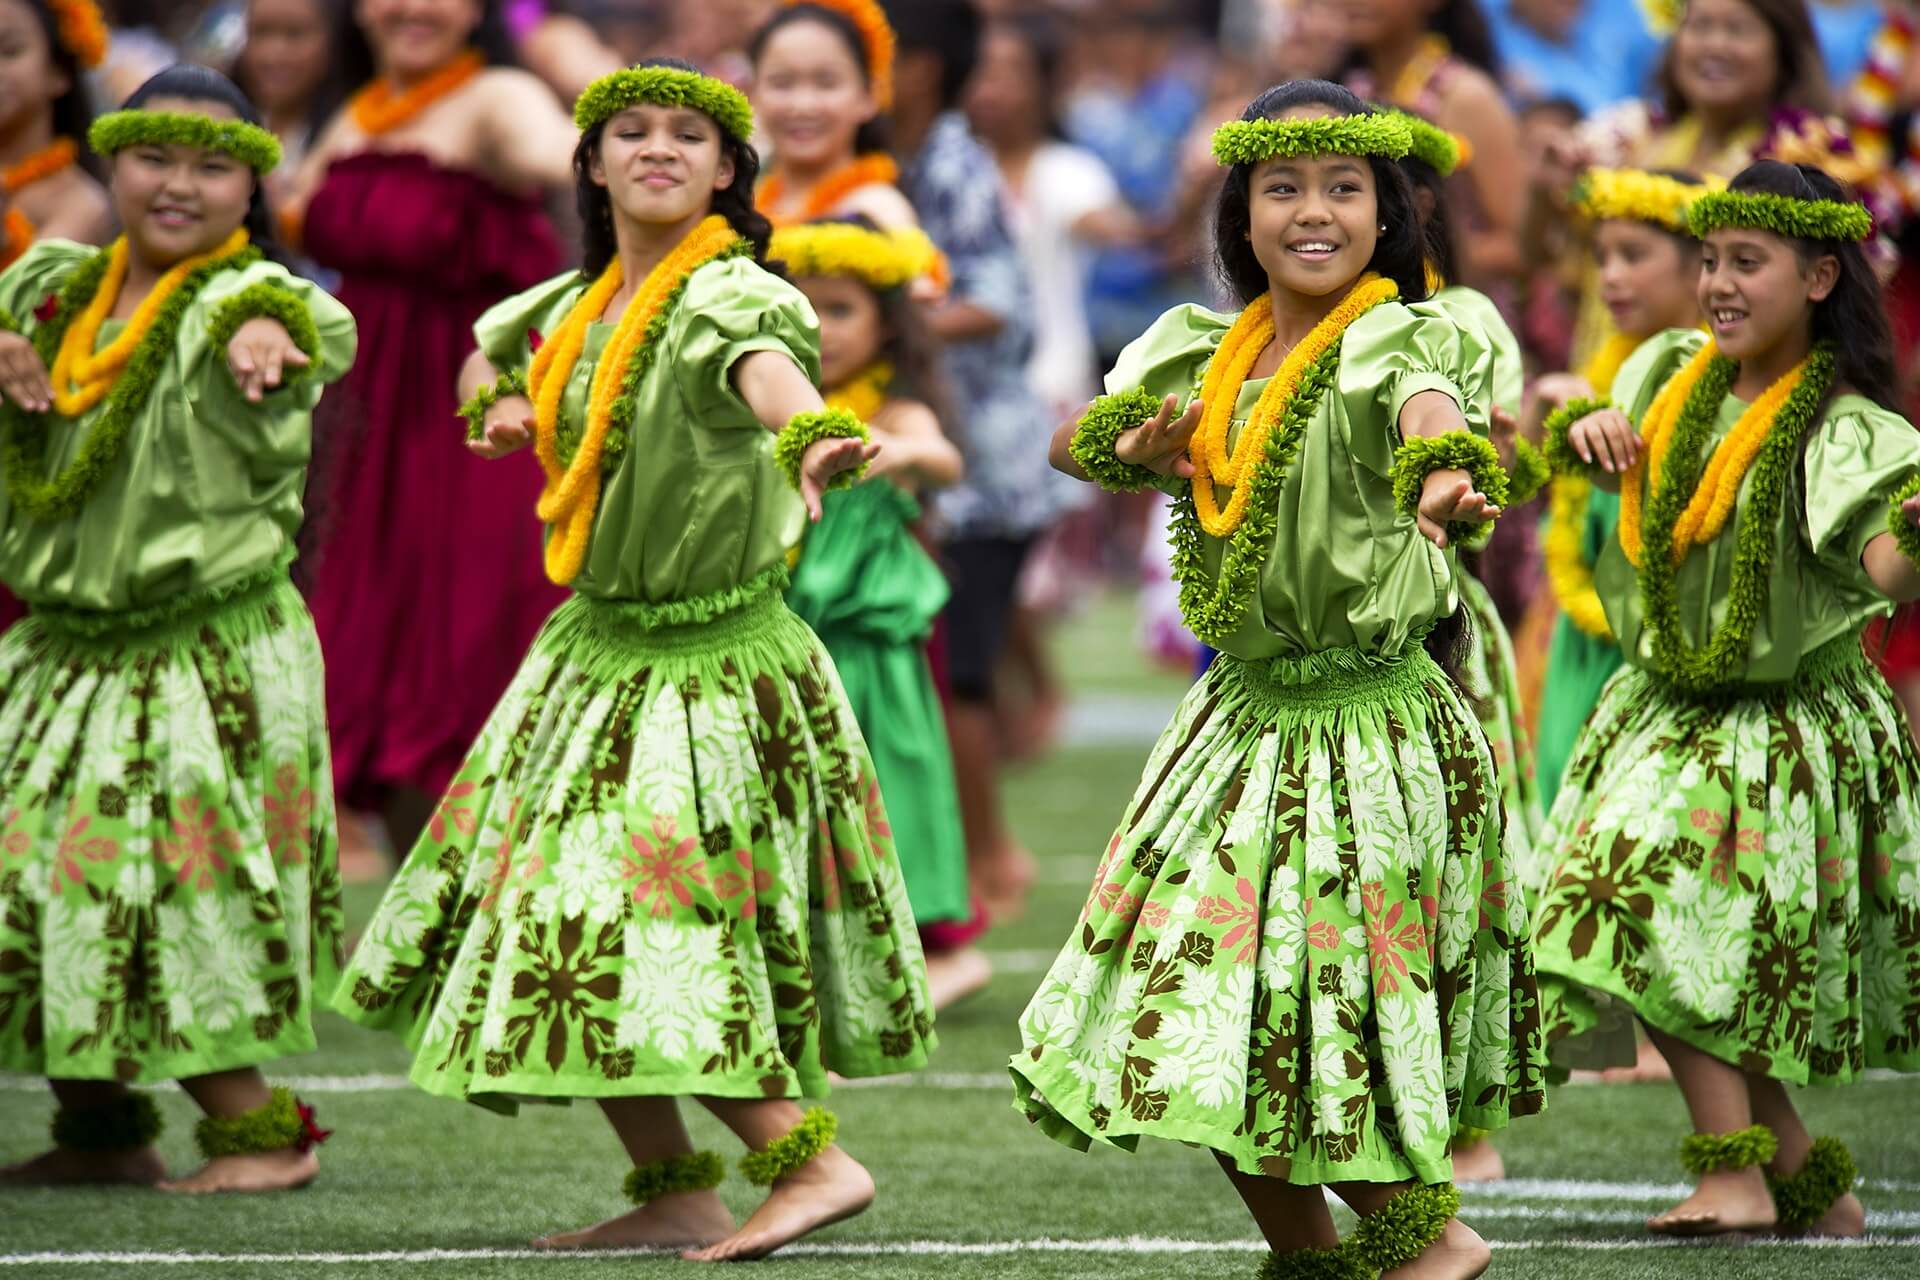 Image of girls dancing in Hawaii at a Luau